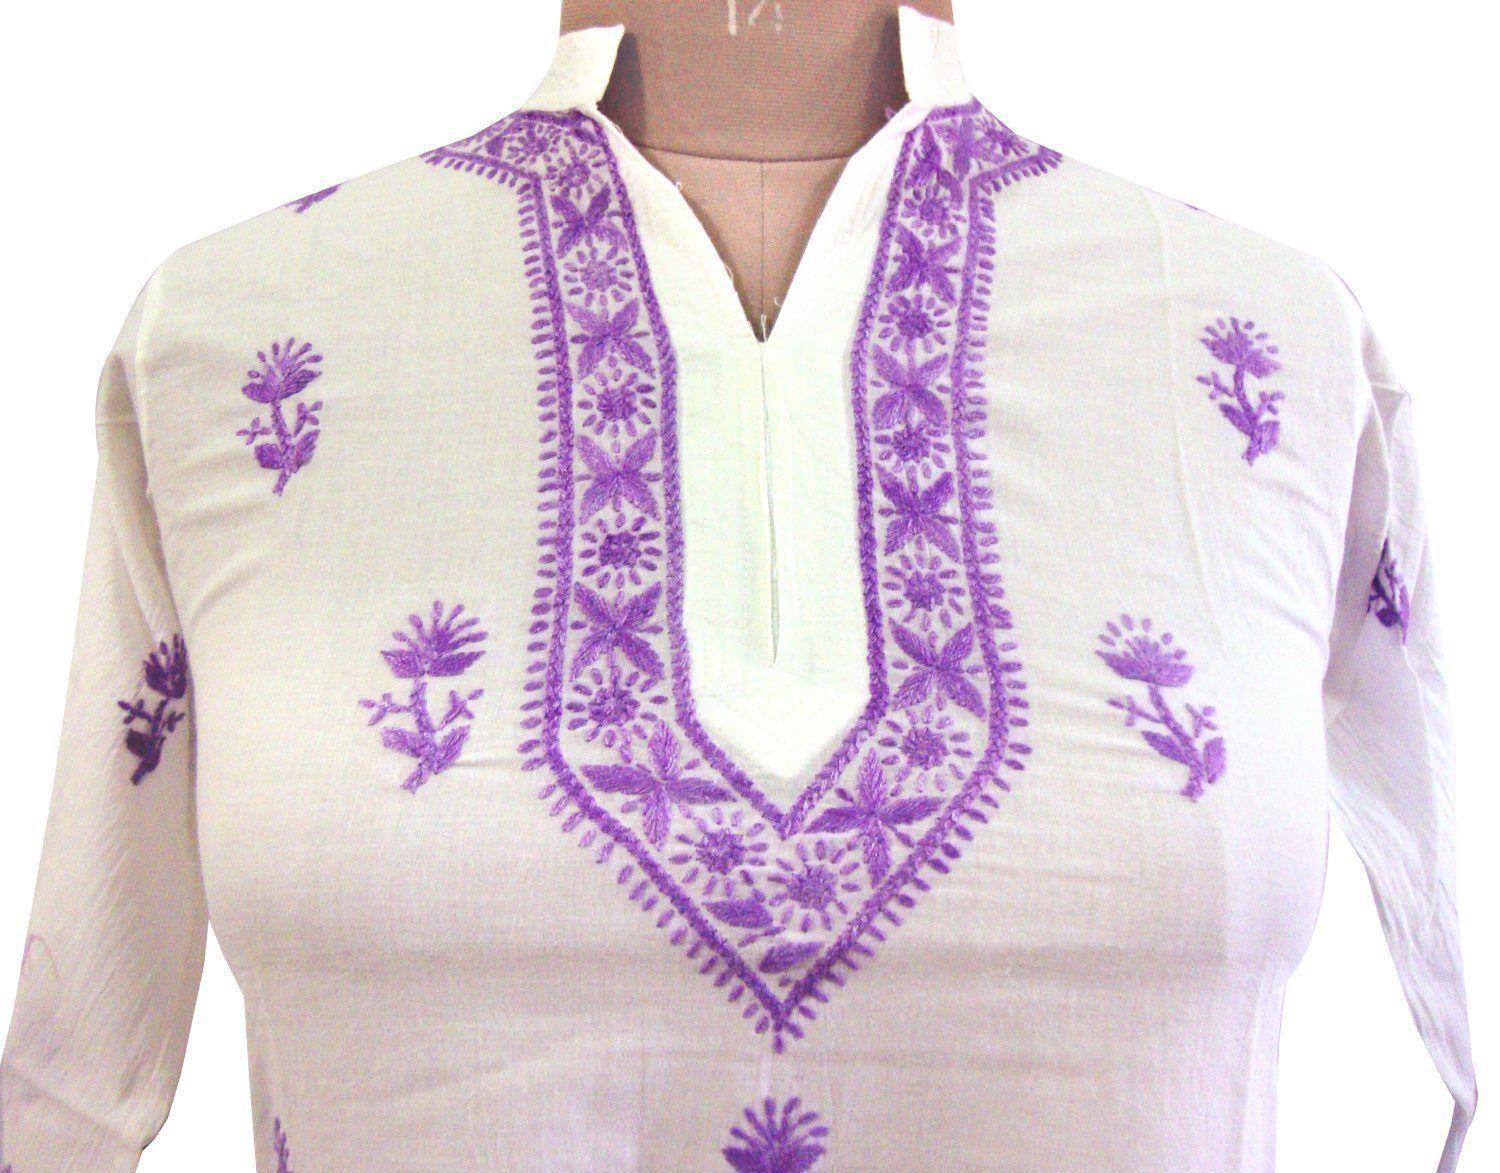 White Cotton Stitched Top dress Size 38 SC515-Anvi Creations-Kurta,Kurti,Top,Tunic